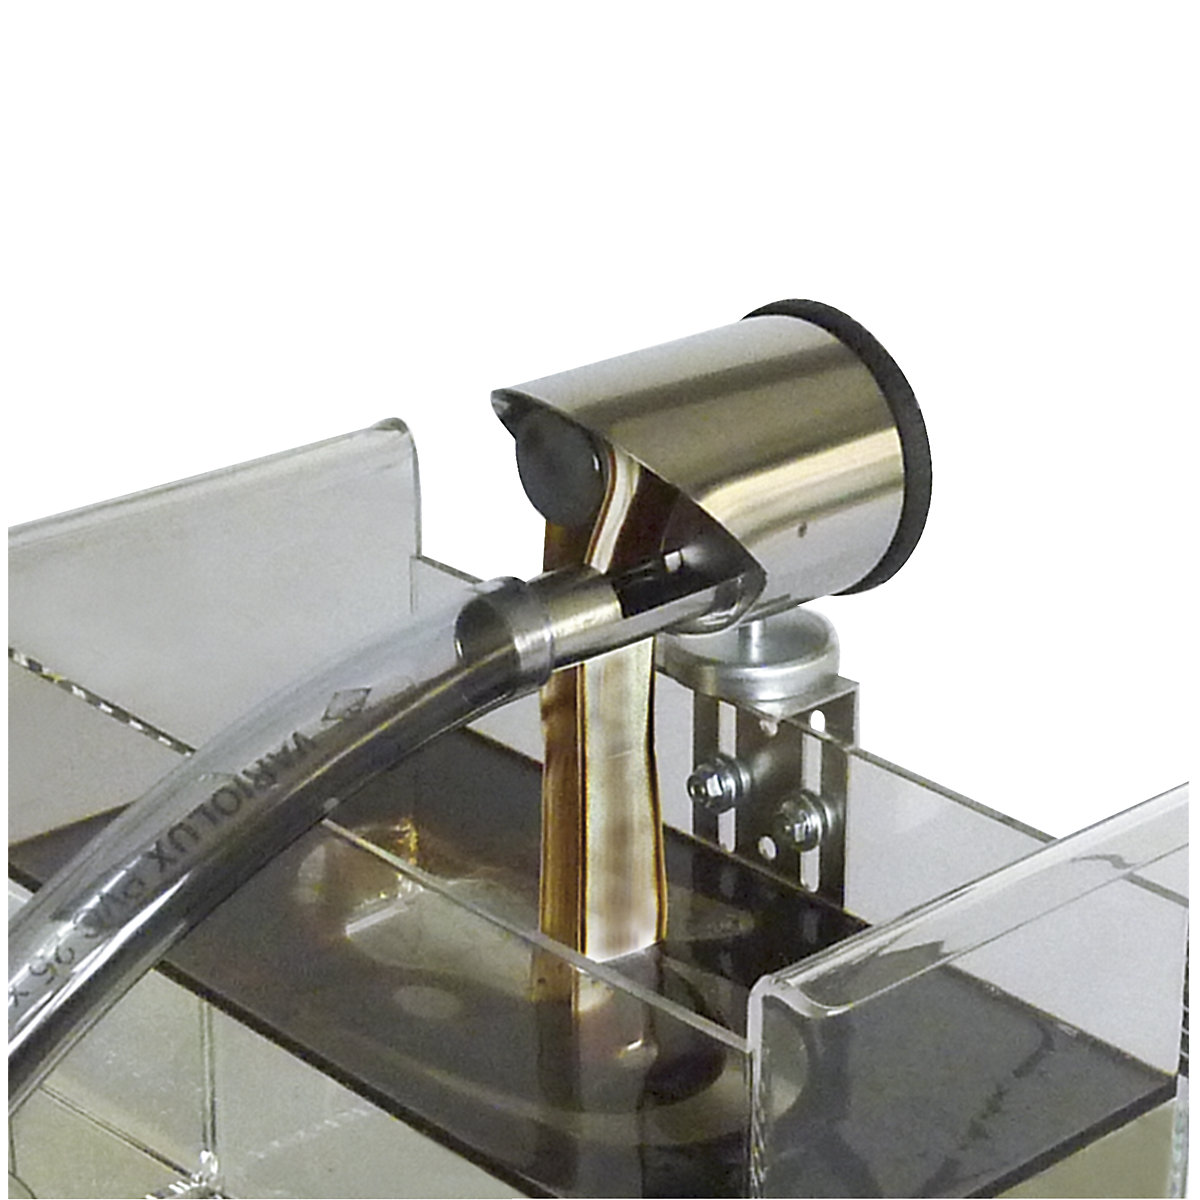 Band-olieskimmer met magneetvoet (Productafbeelding 15)-14